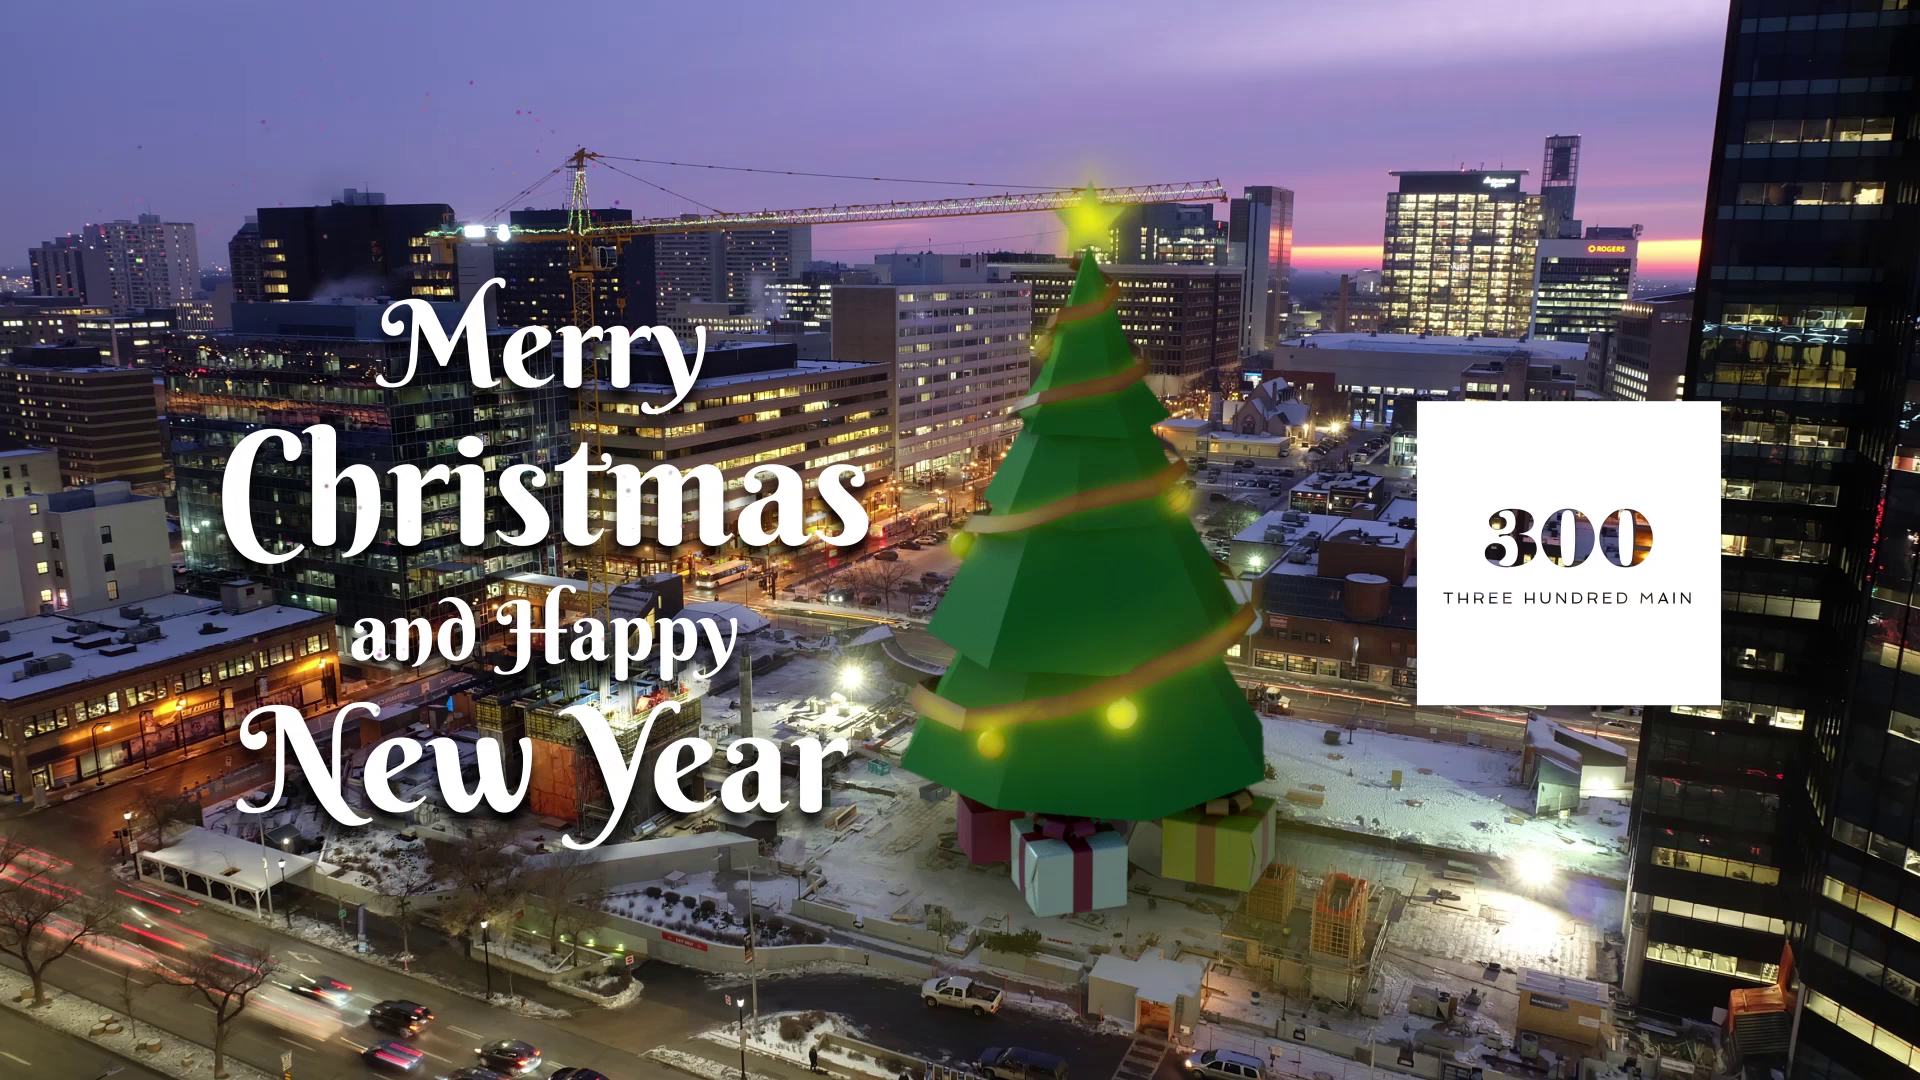 Downtown Winnipeg Apartments, 300 Main Winnipeg, Holiday Greetings, Merry Christmas. New Year